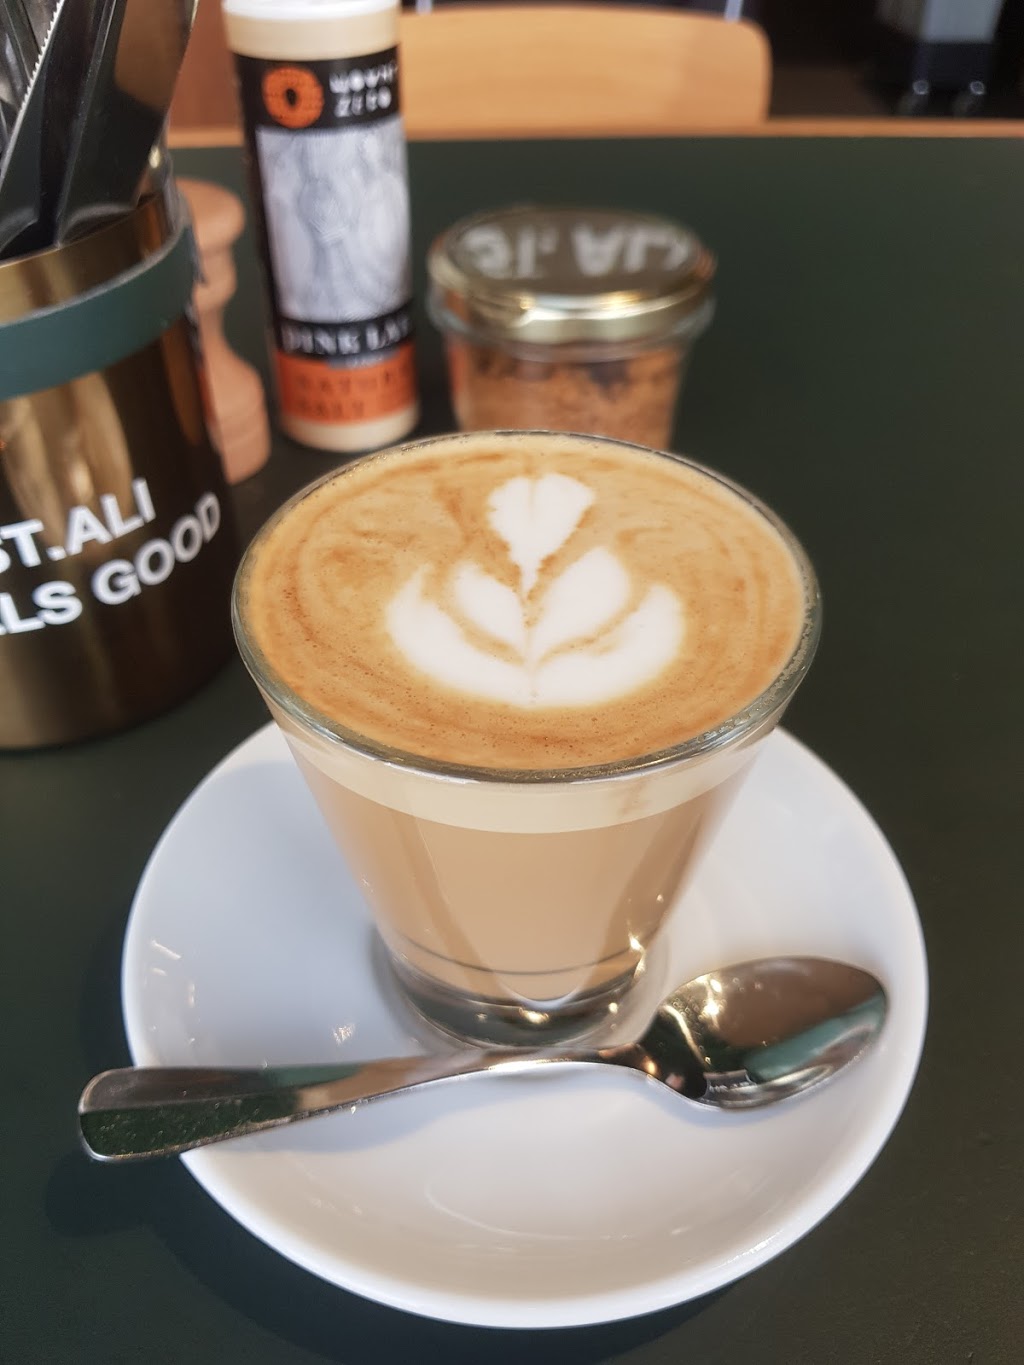 St. Ali Coffee Roasters | cafe | Melbourne Tullamarine Airport Tullamarine Freeway Terminal 2 International, Departure Dr, Melbourne Airport VIC 3045, Australia